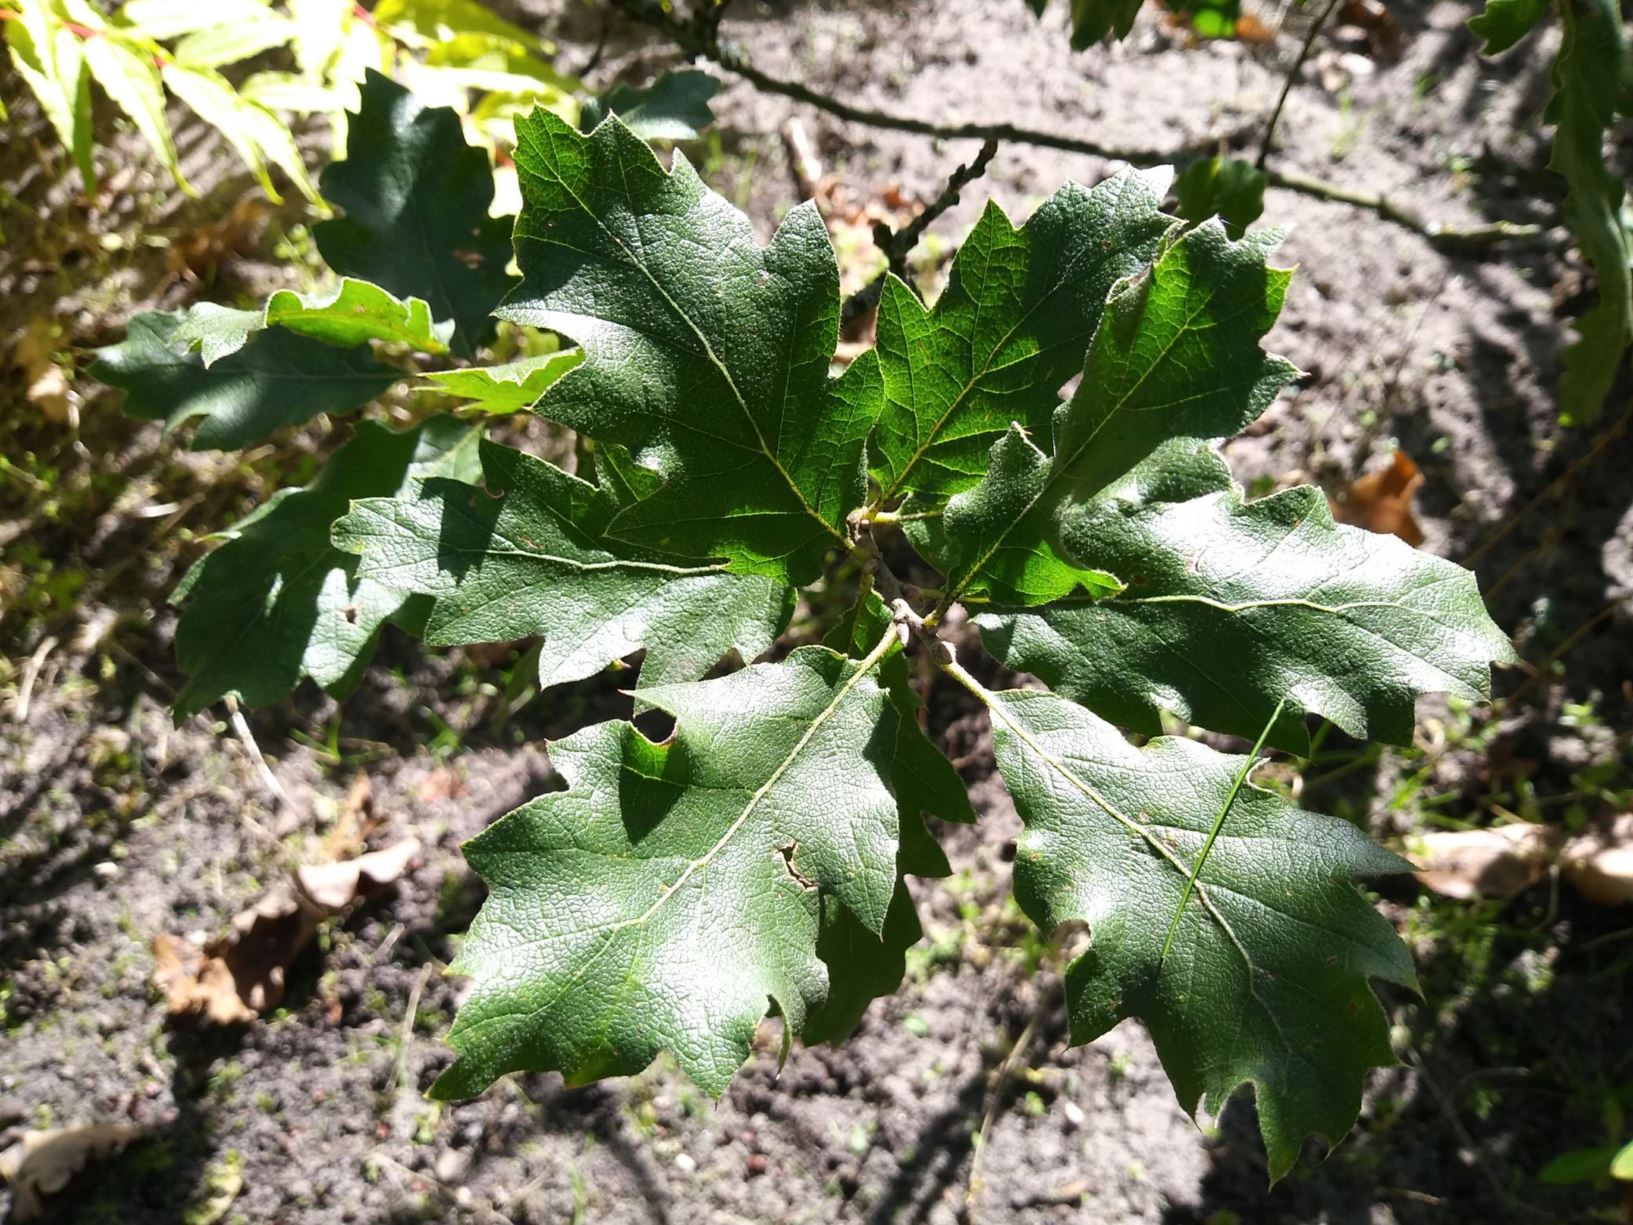 Quercus ithaburensis subsp. macrolepis - Valonia oak